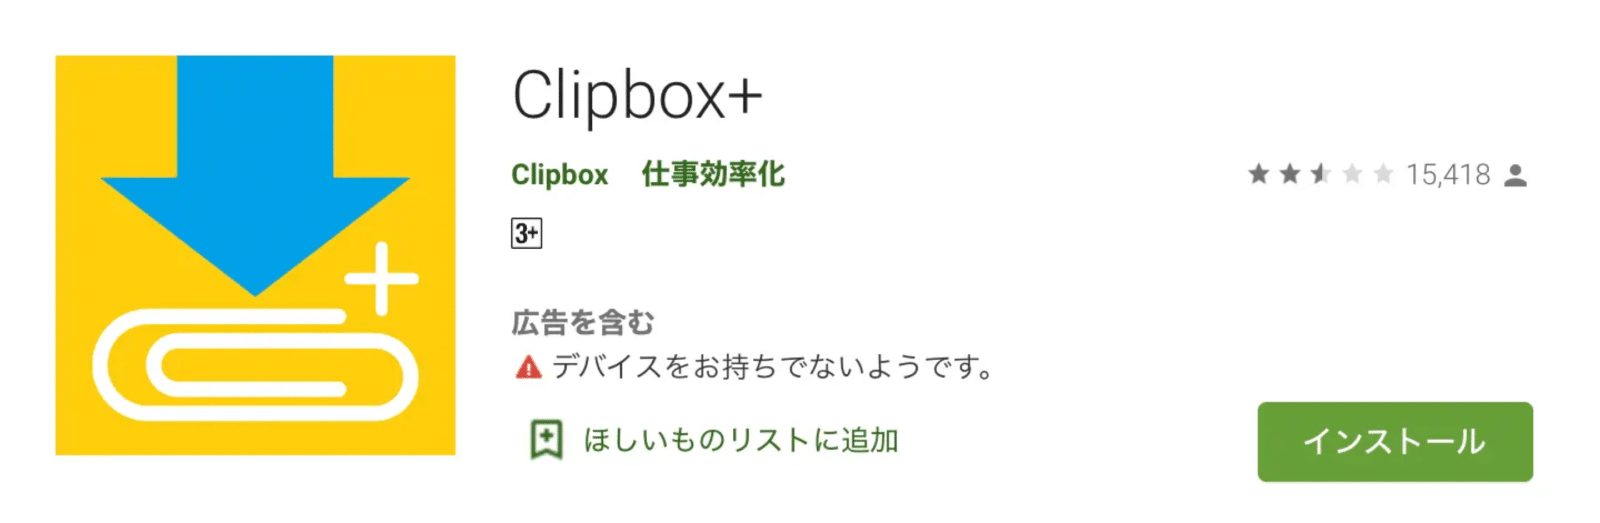 Clipbox 動画の保存方法など使い方を徹底解説